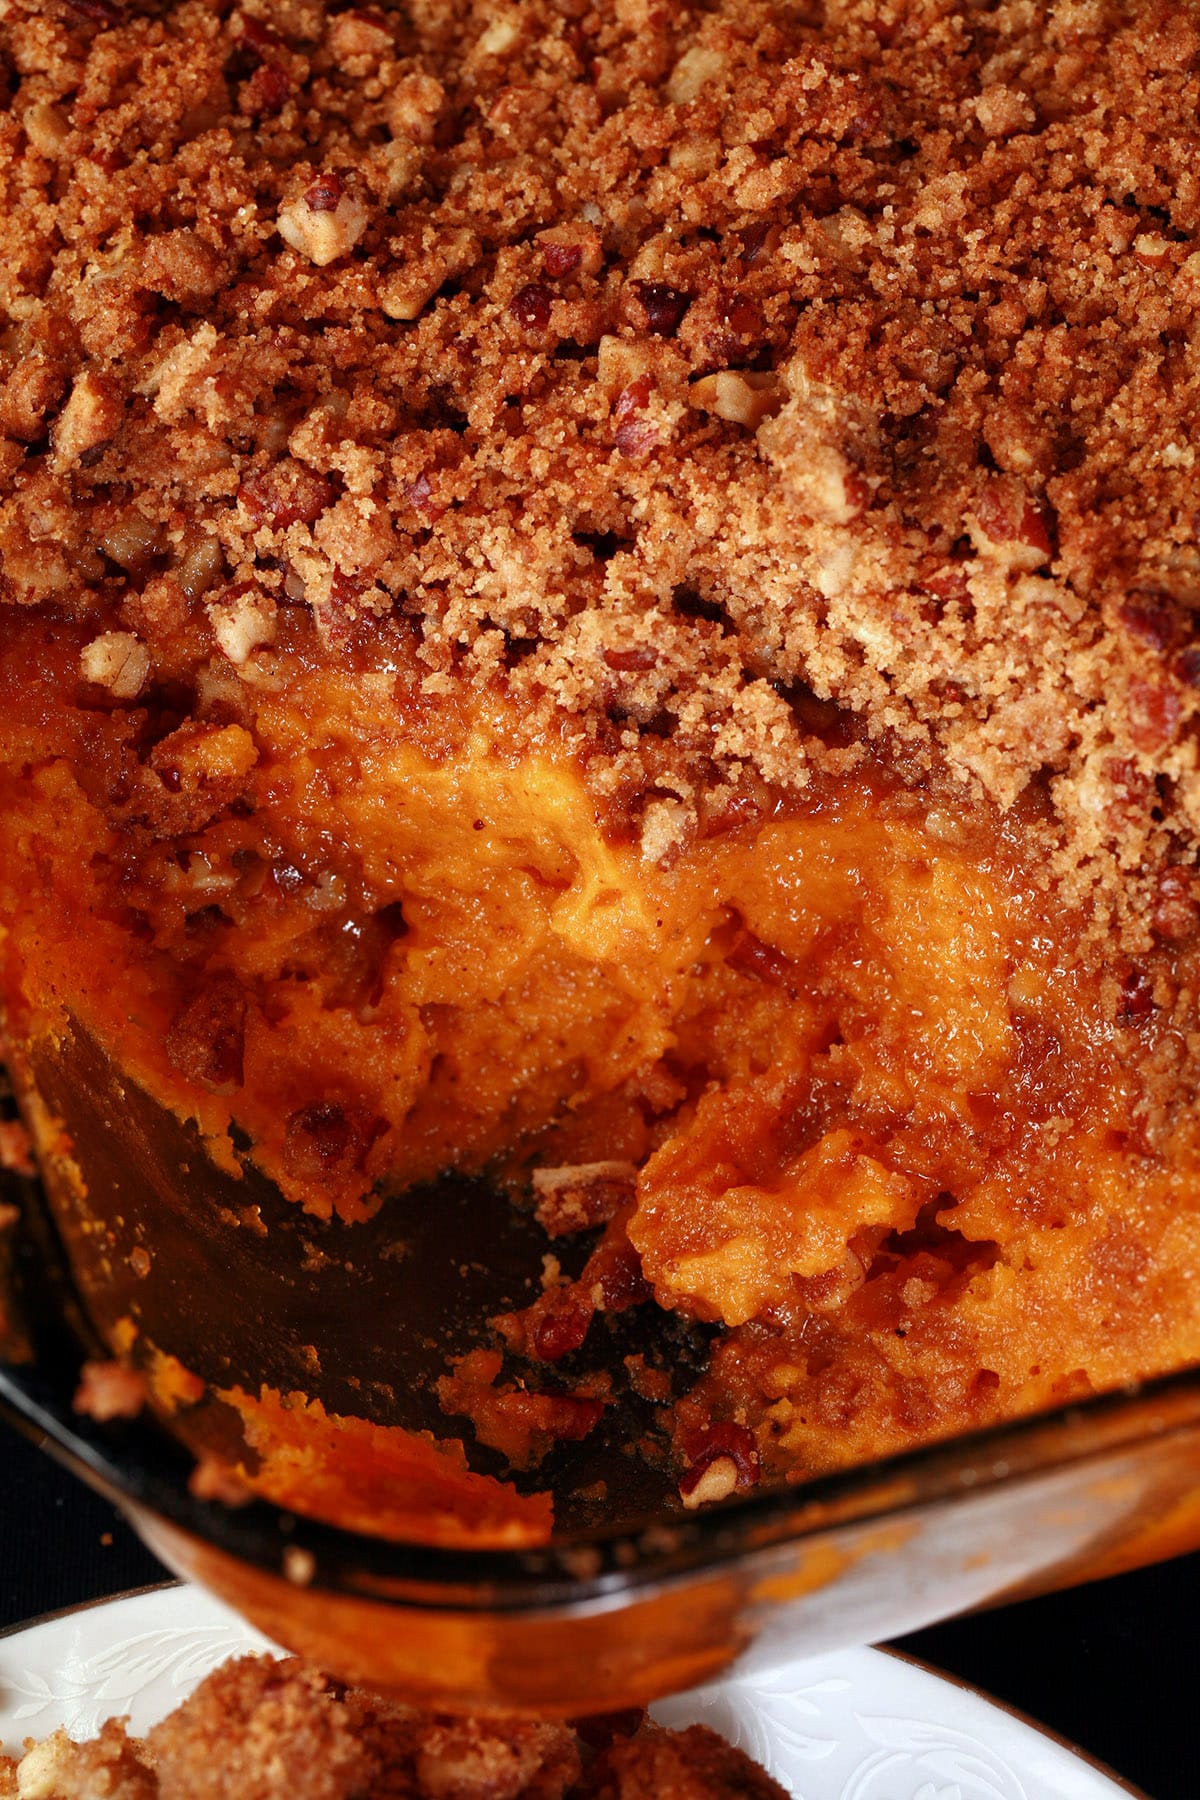 A close up view of a pan of sweet potato souffle.